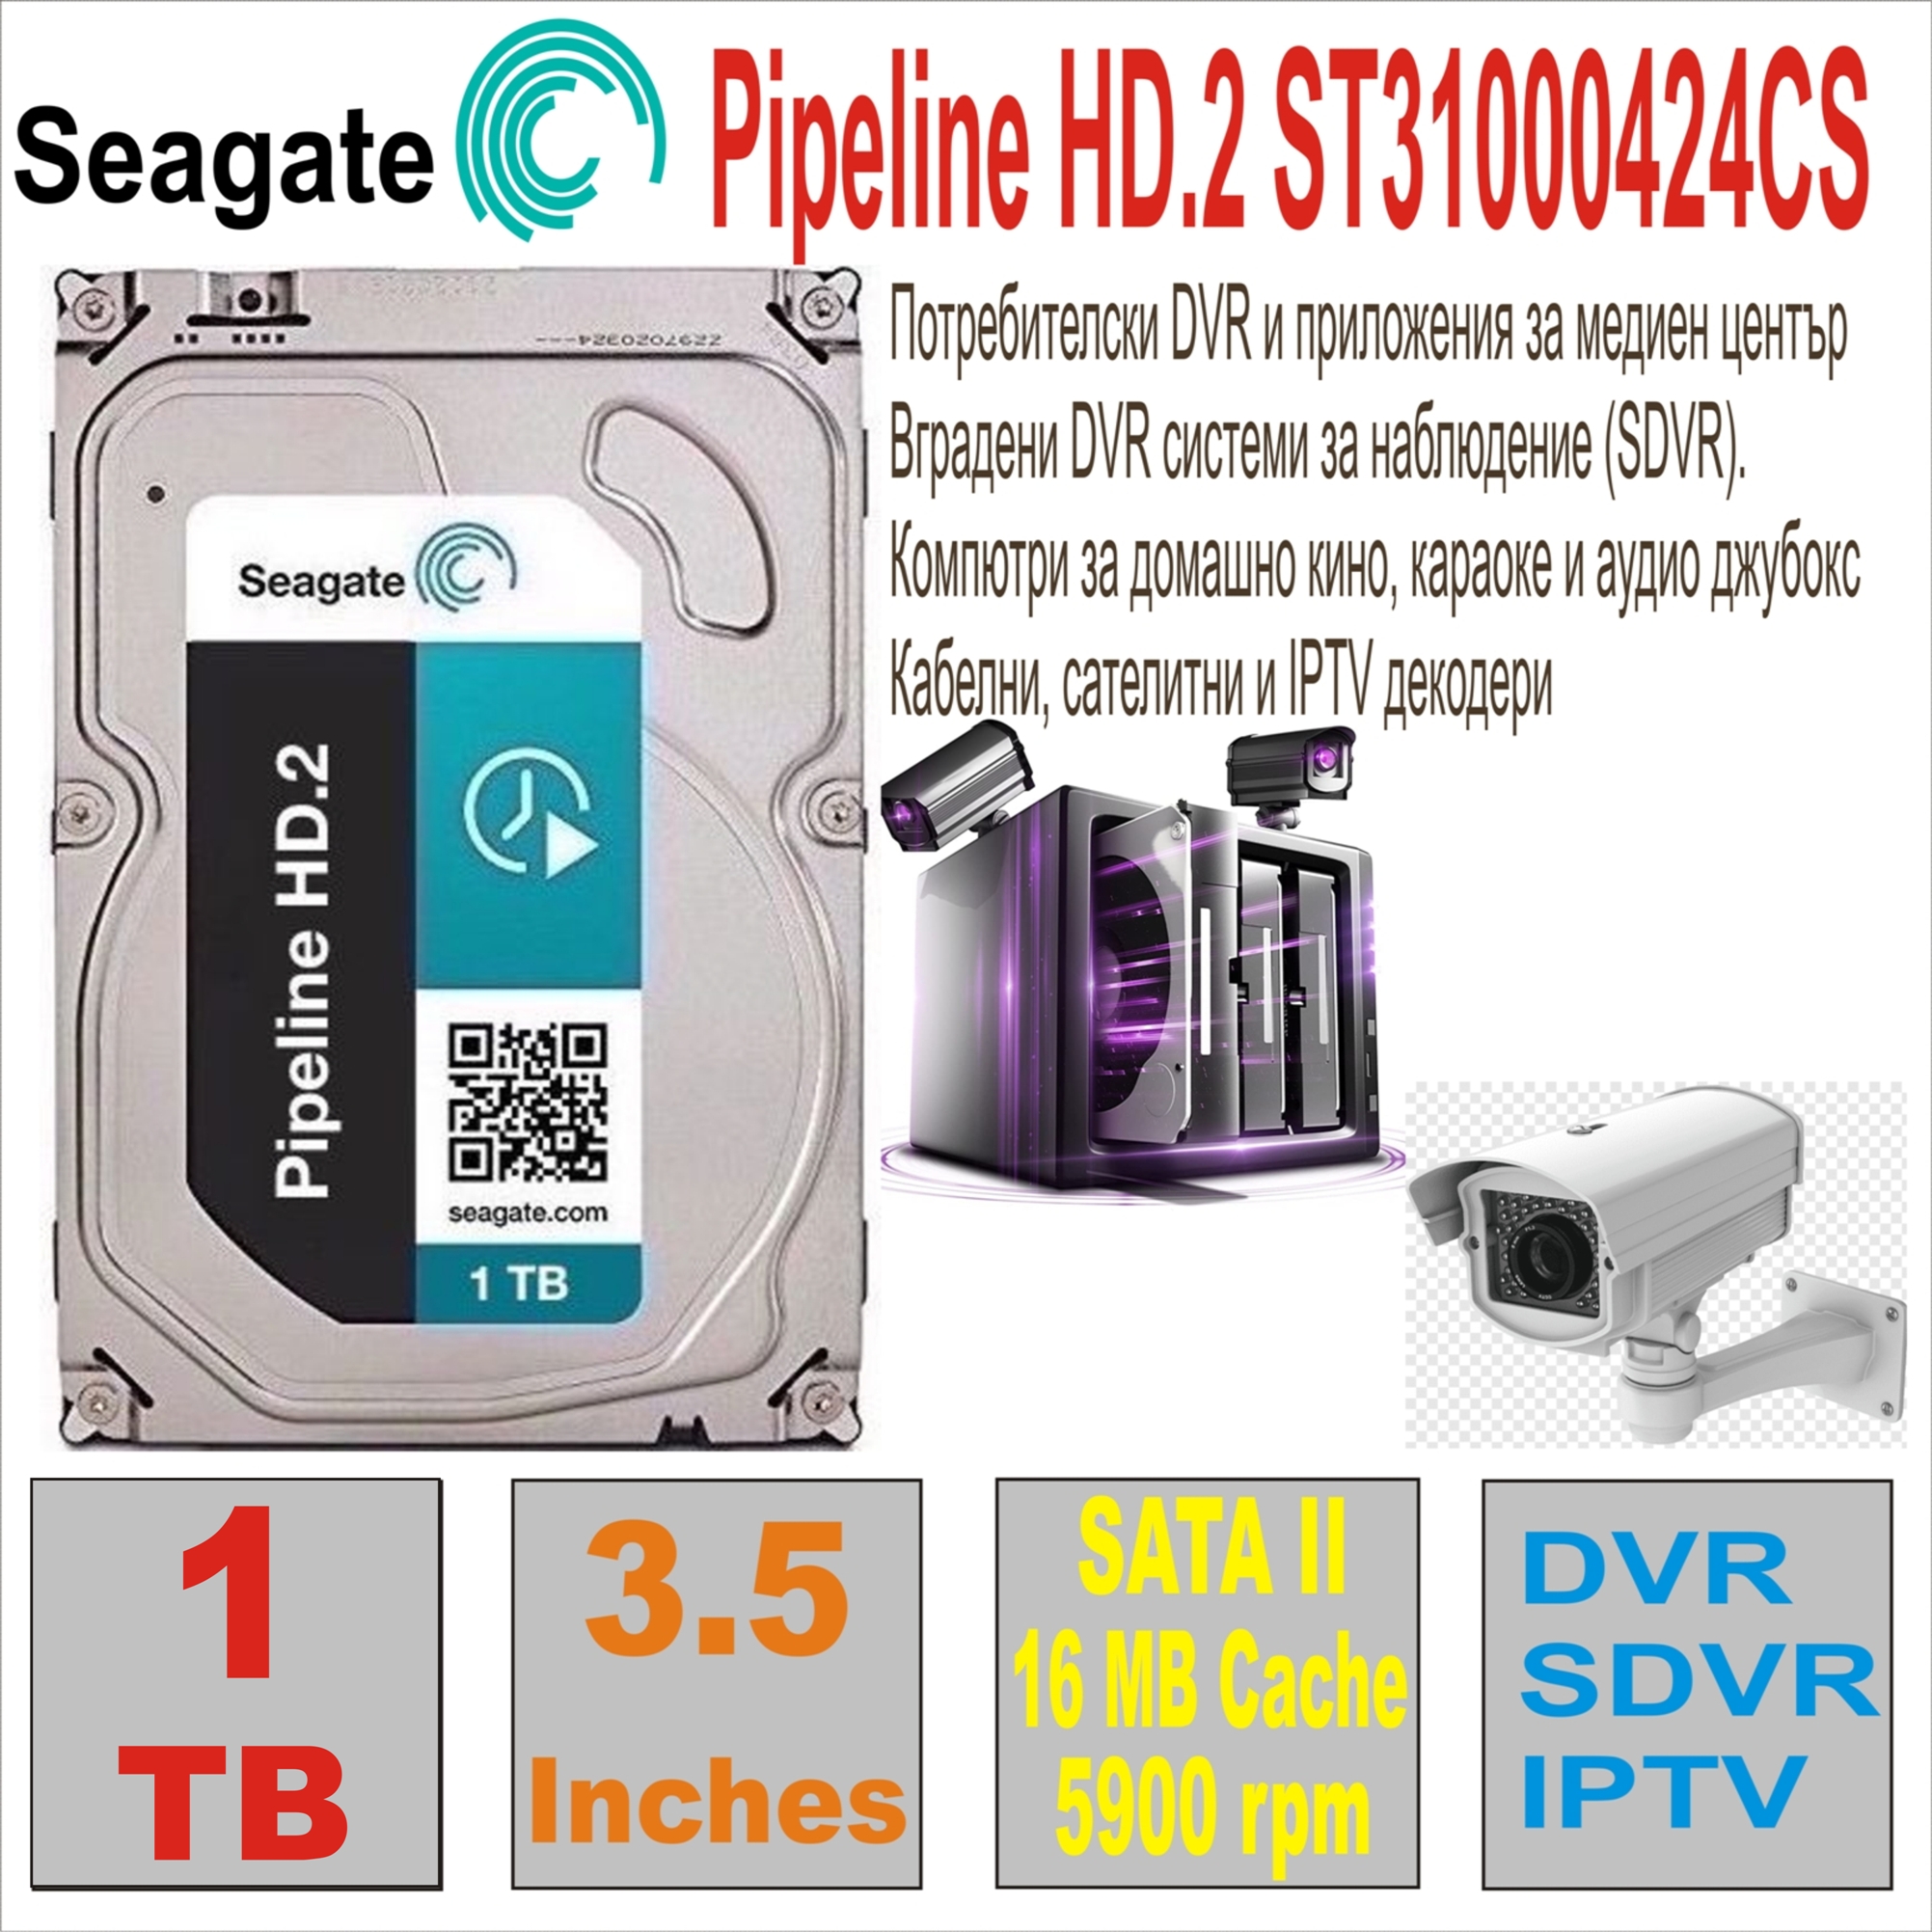 HDD 3.5` 1 TB SEAGATE Pipeline HD.2 ST31000424CS